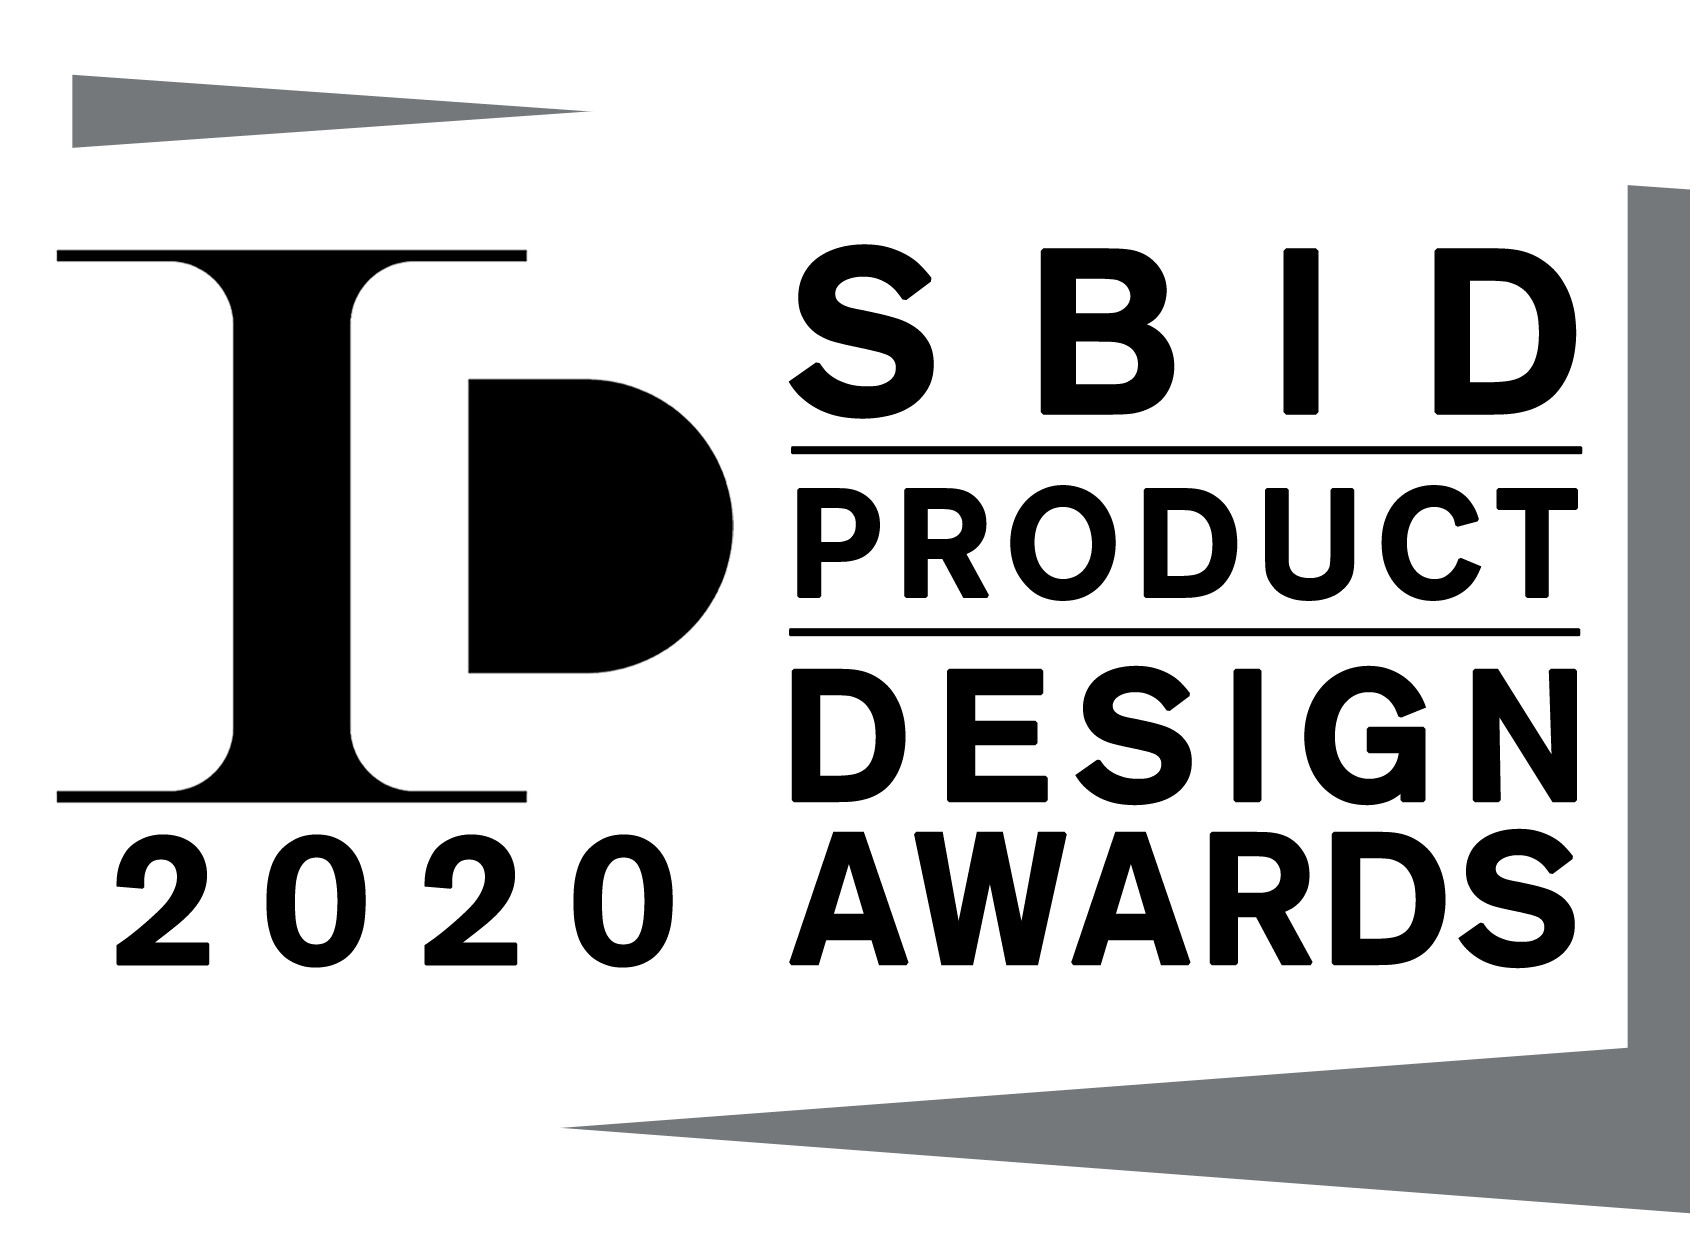 SBID Product Design Awards 2020 Logo